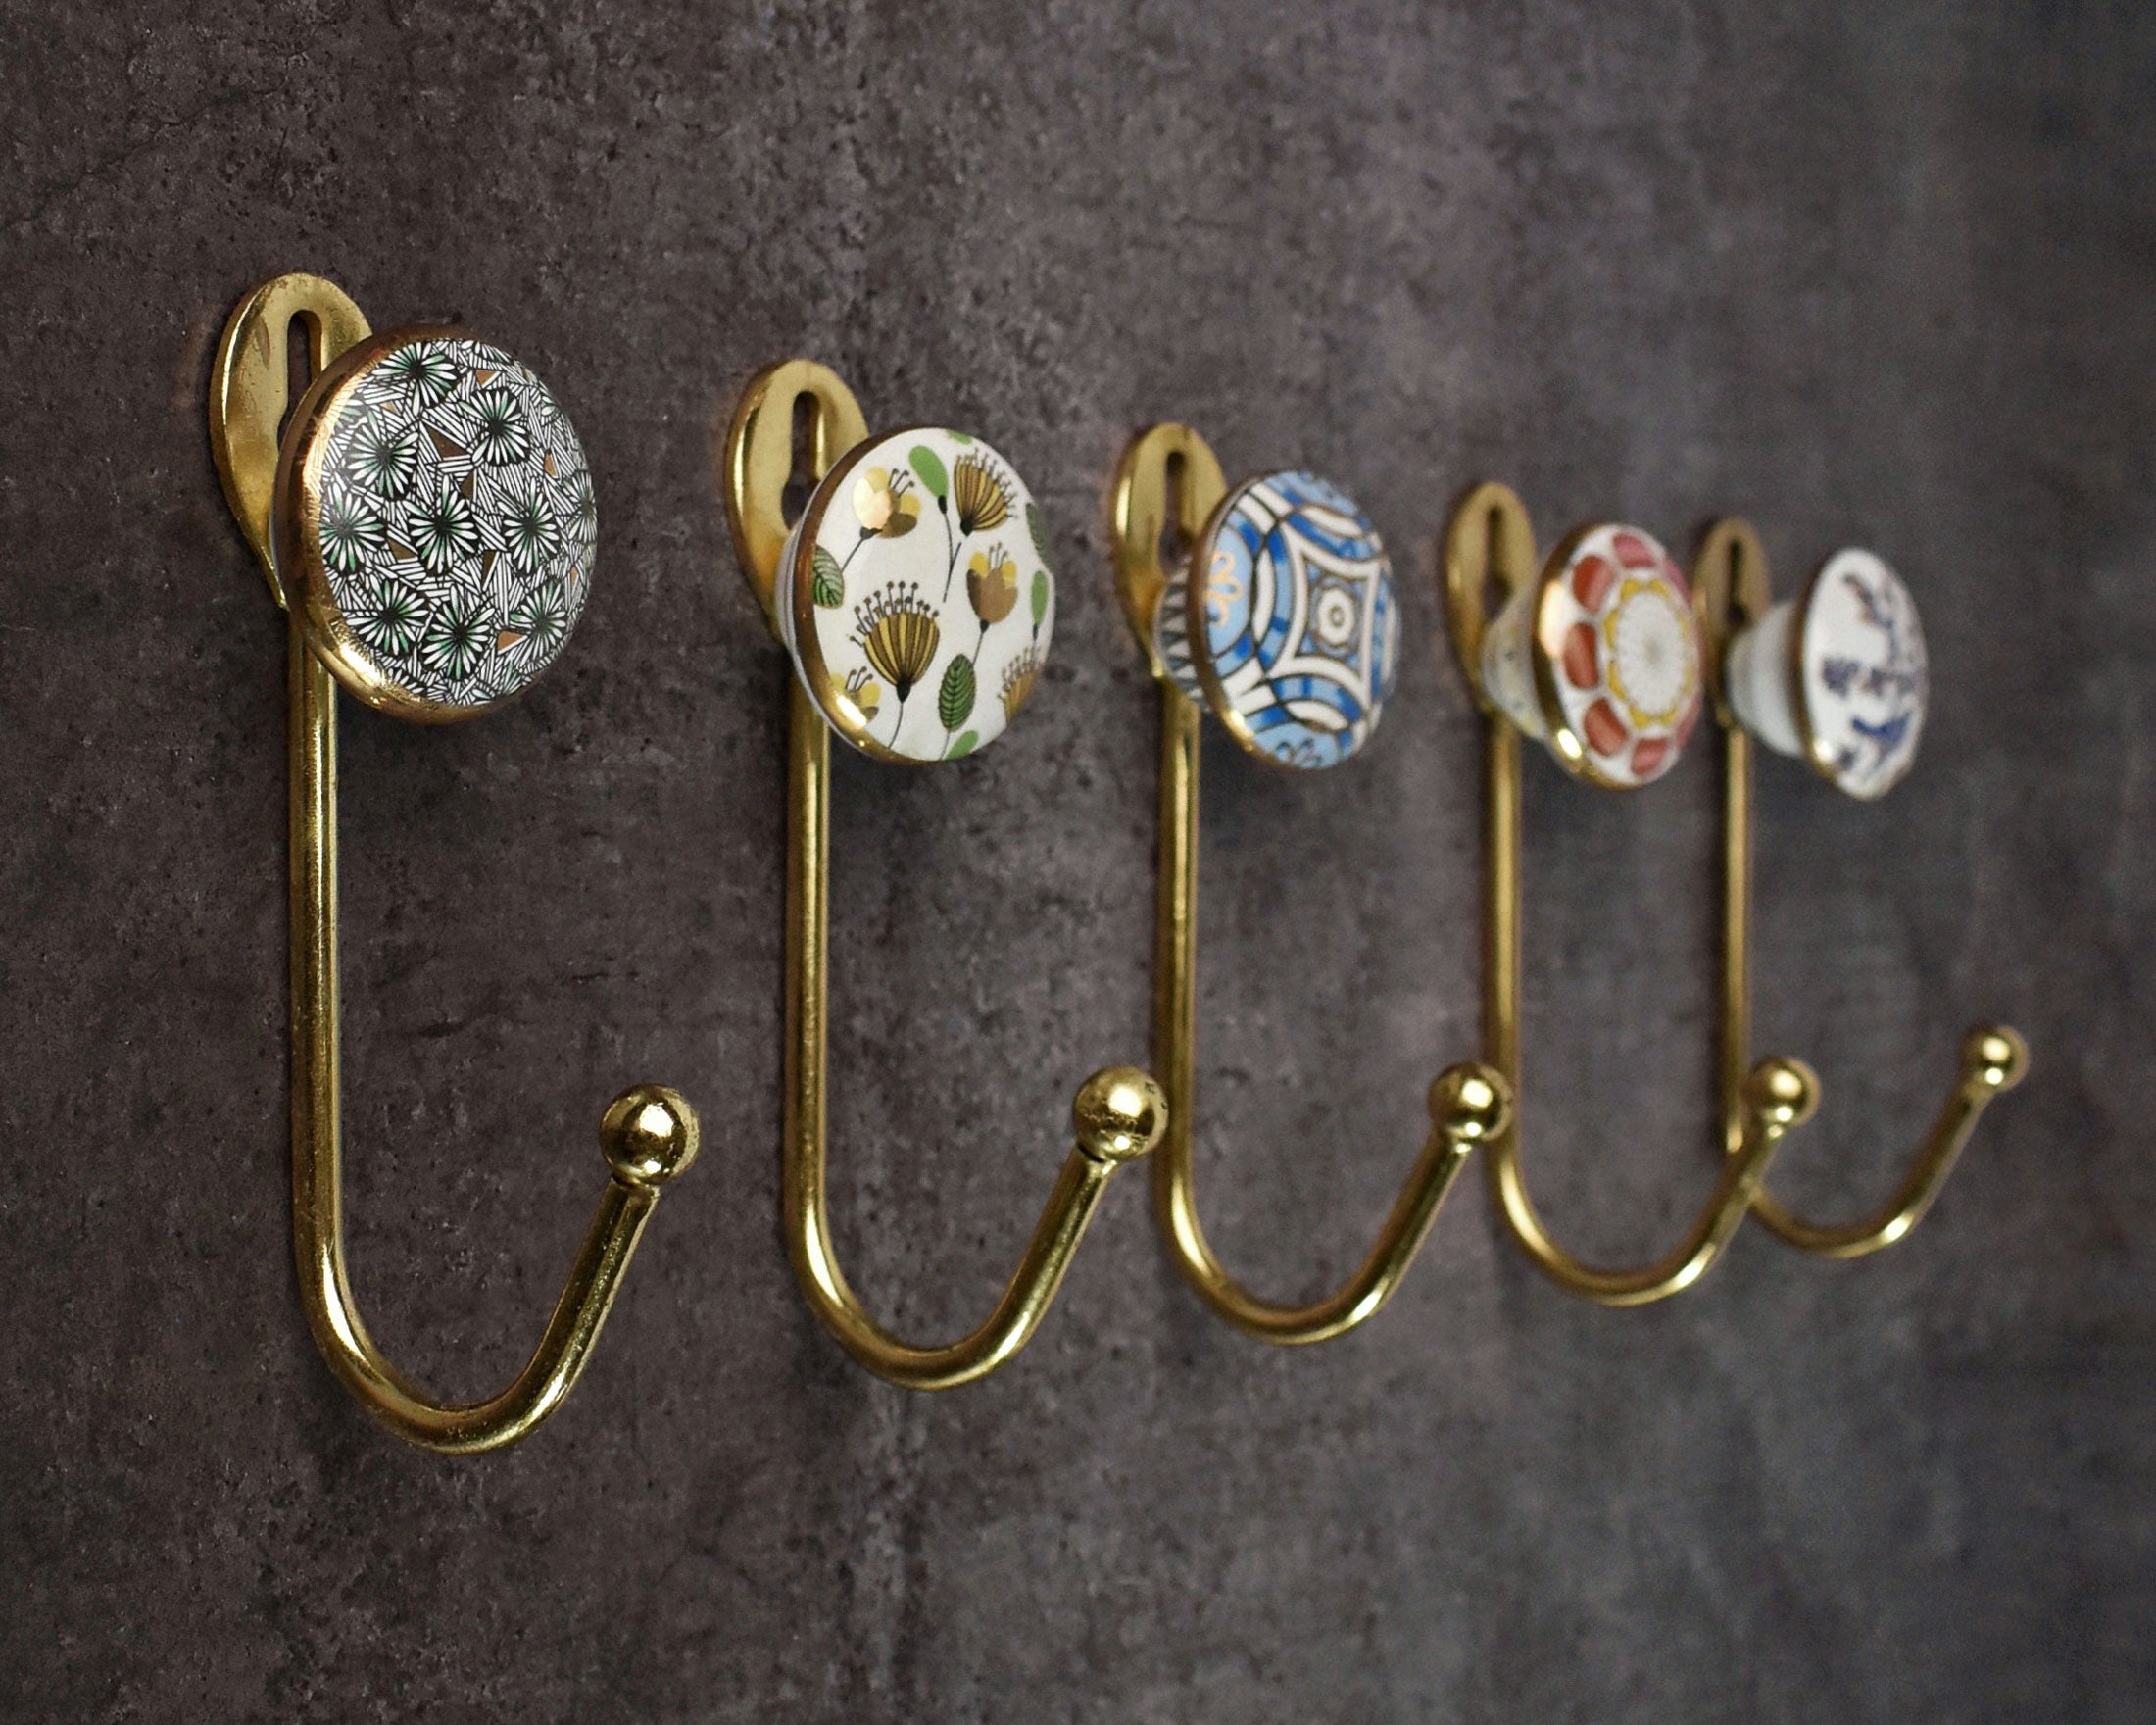 Decorative Ceramic Gold Coat Hooks Vintage Wall Hooks Coat Rack Wall Mount  Towel Hook Entryway Hooks